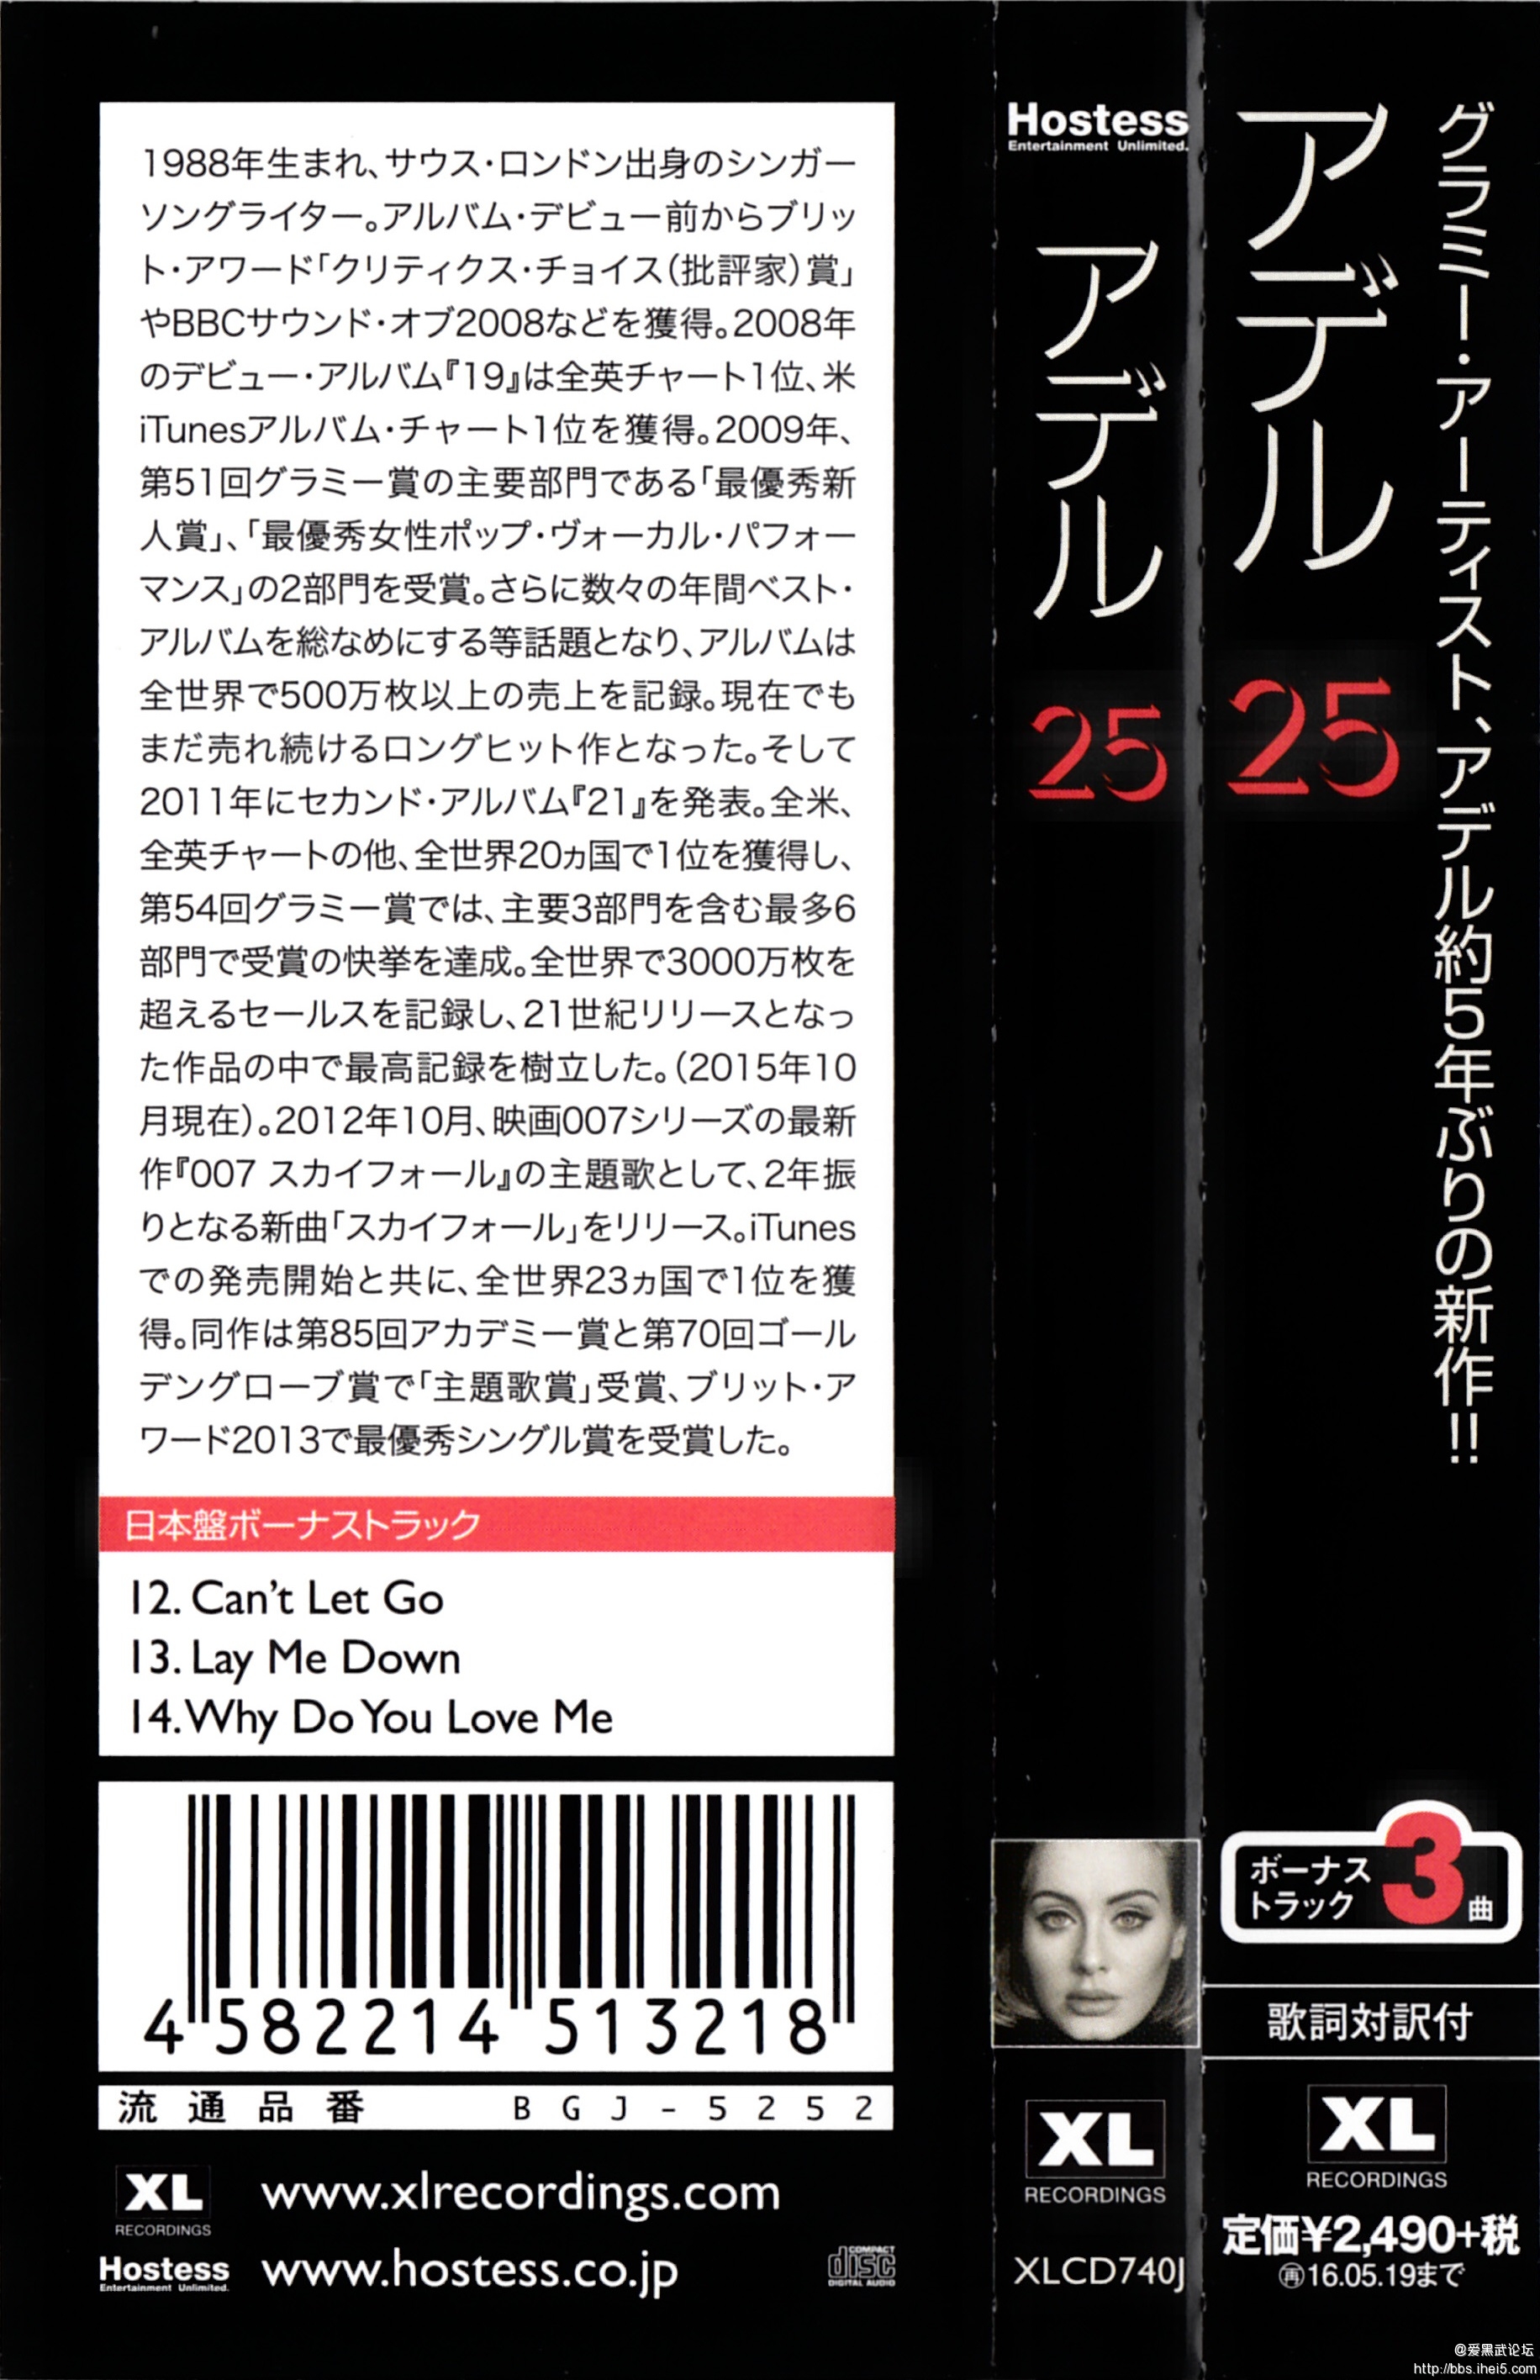 Adele - 25 (Japan Edition) 001.jpg